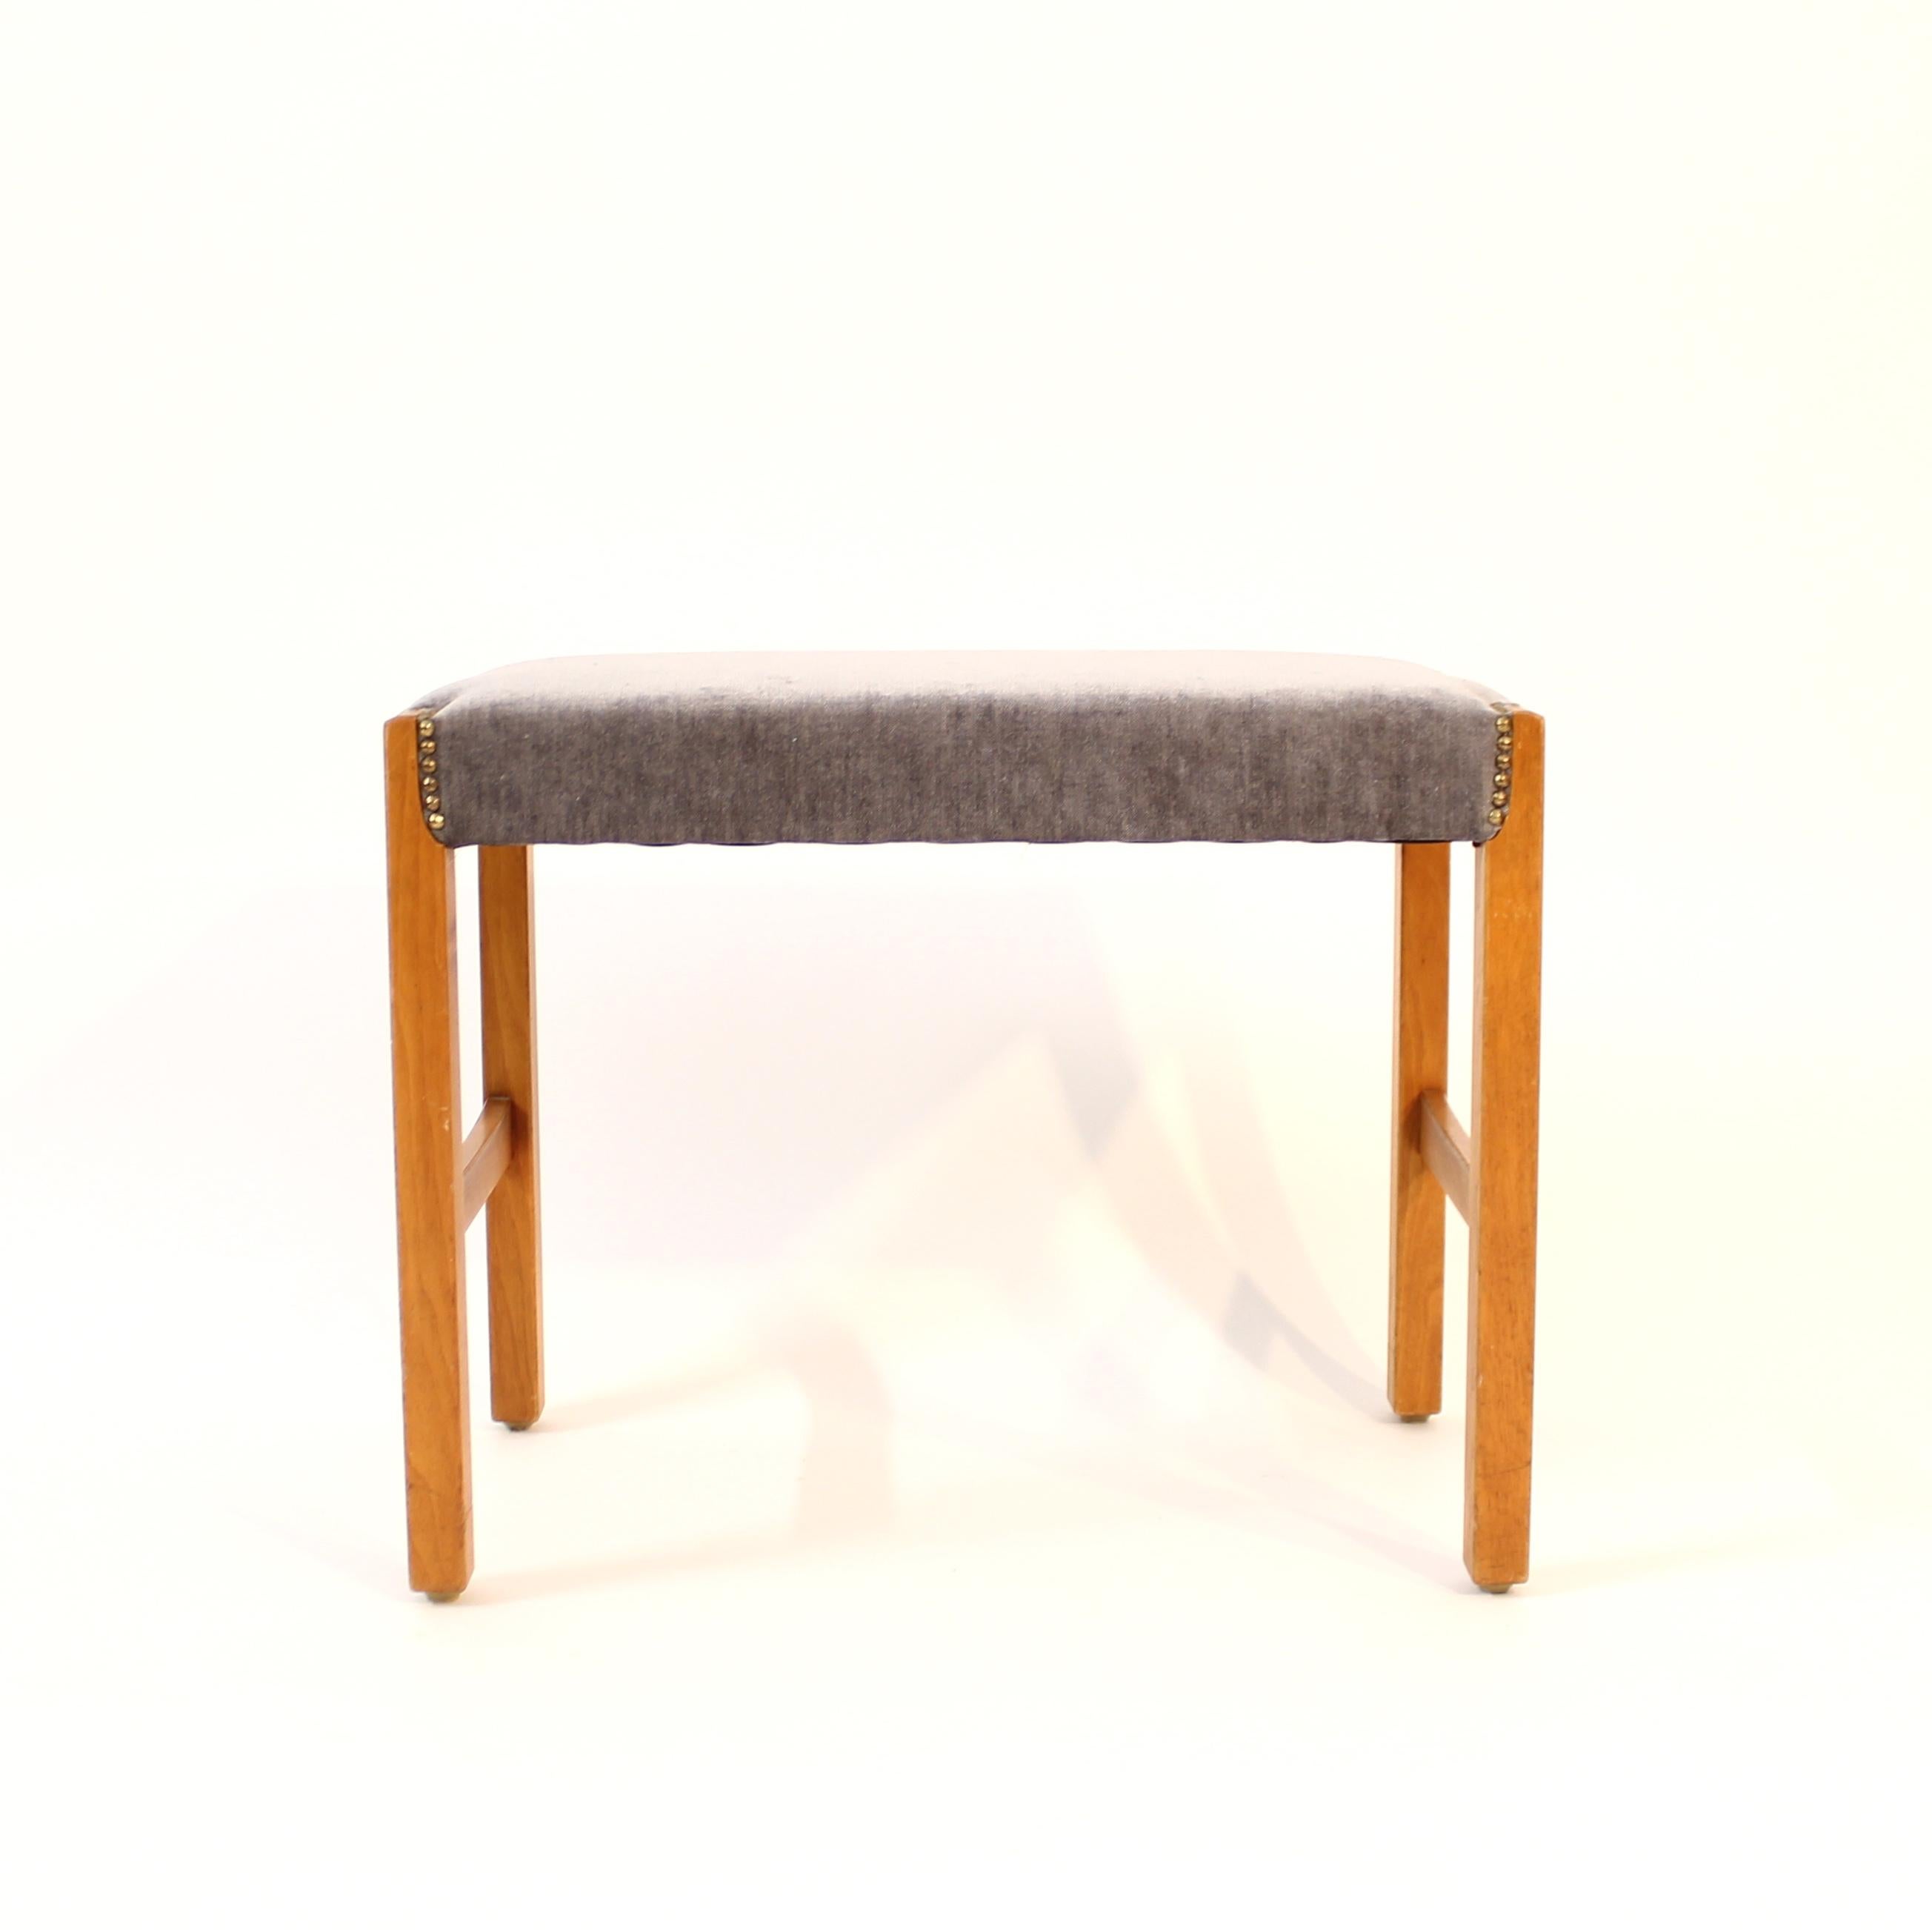 Scandinavian Modern Scandinavian mid-century stool / piano stool in the style of Josef Frank, 1950s For Sale